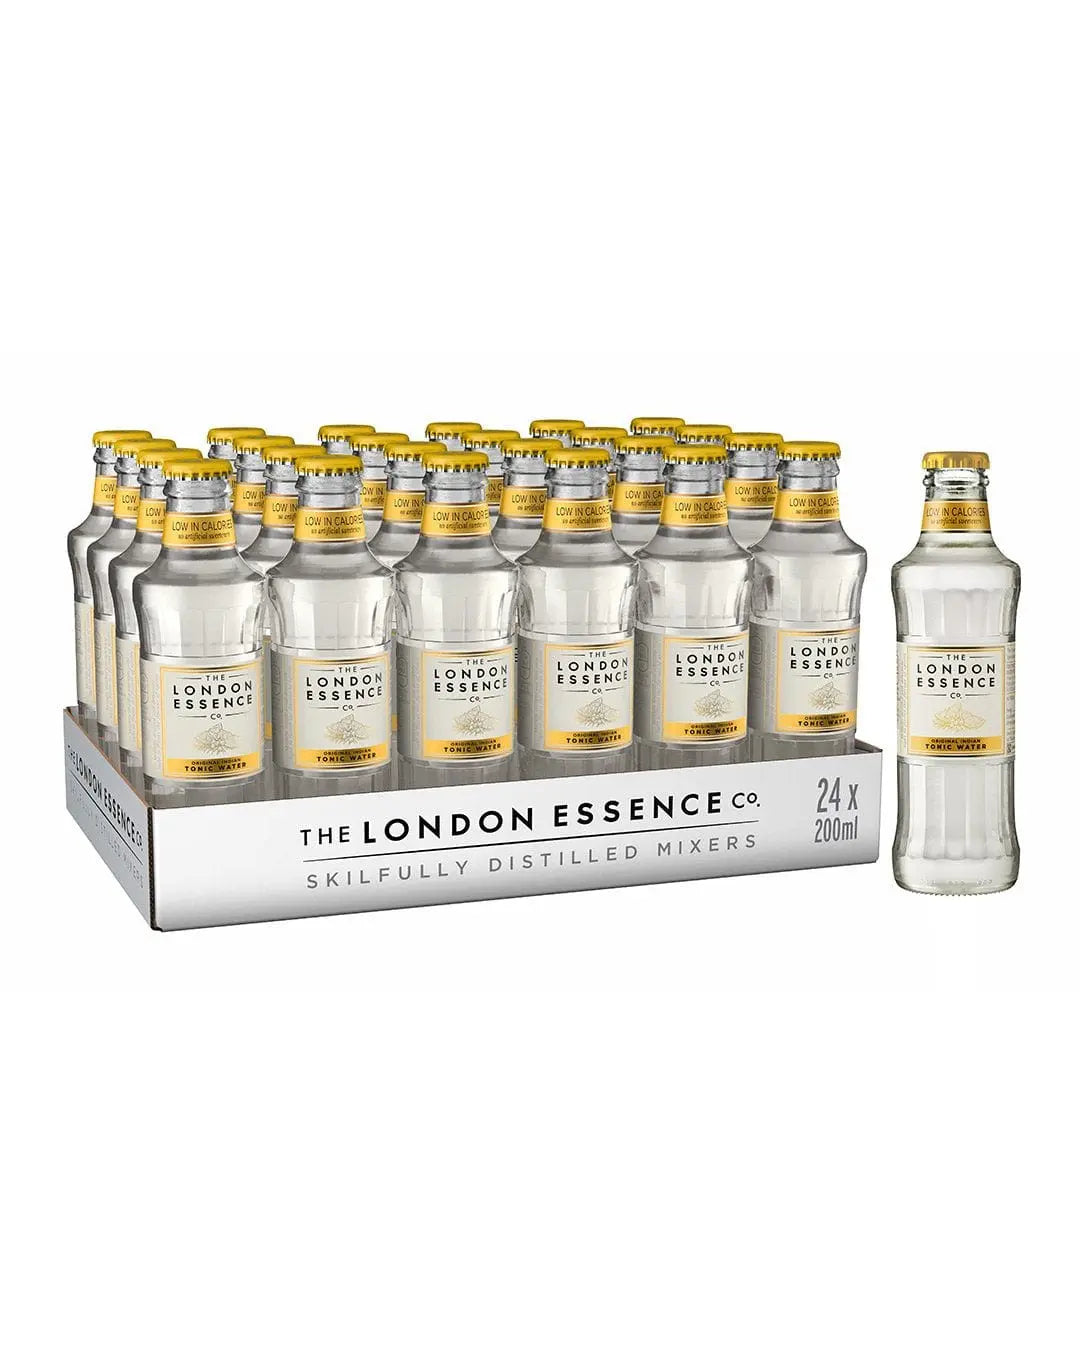 London Essence Company Indian Tonic Water Bottle Multipack, 24 x 200 ml Tonics